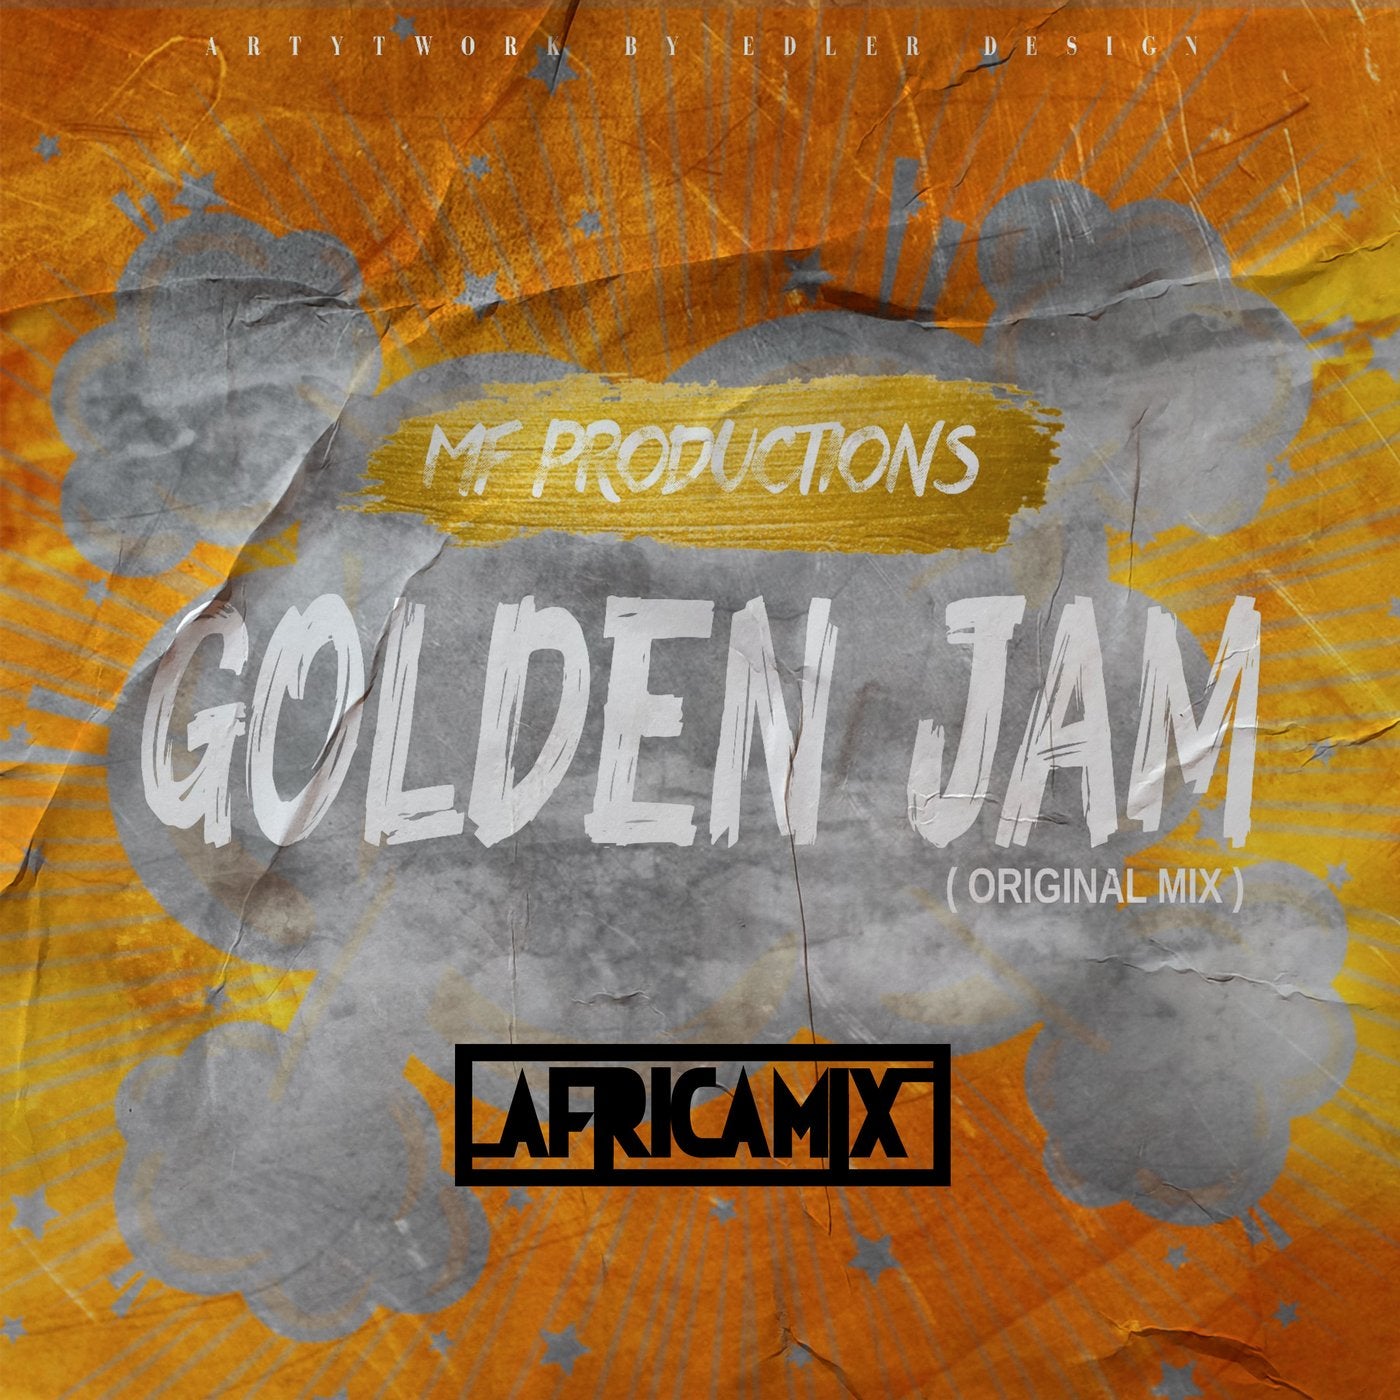 Golden Jam